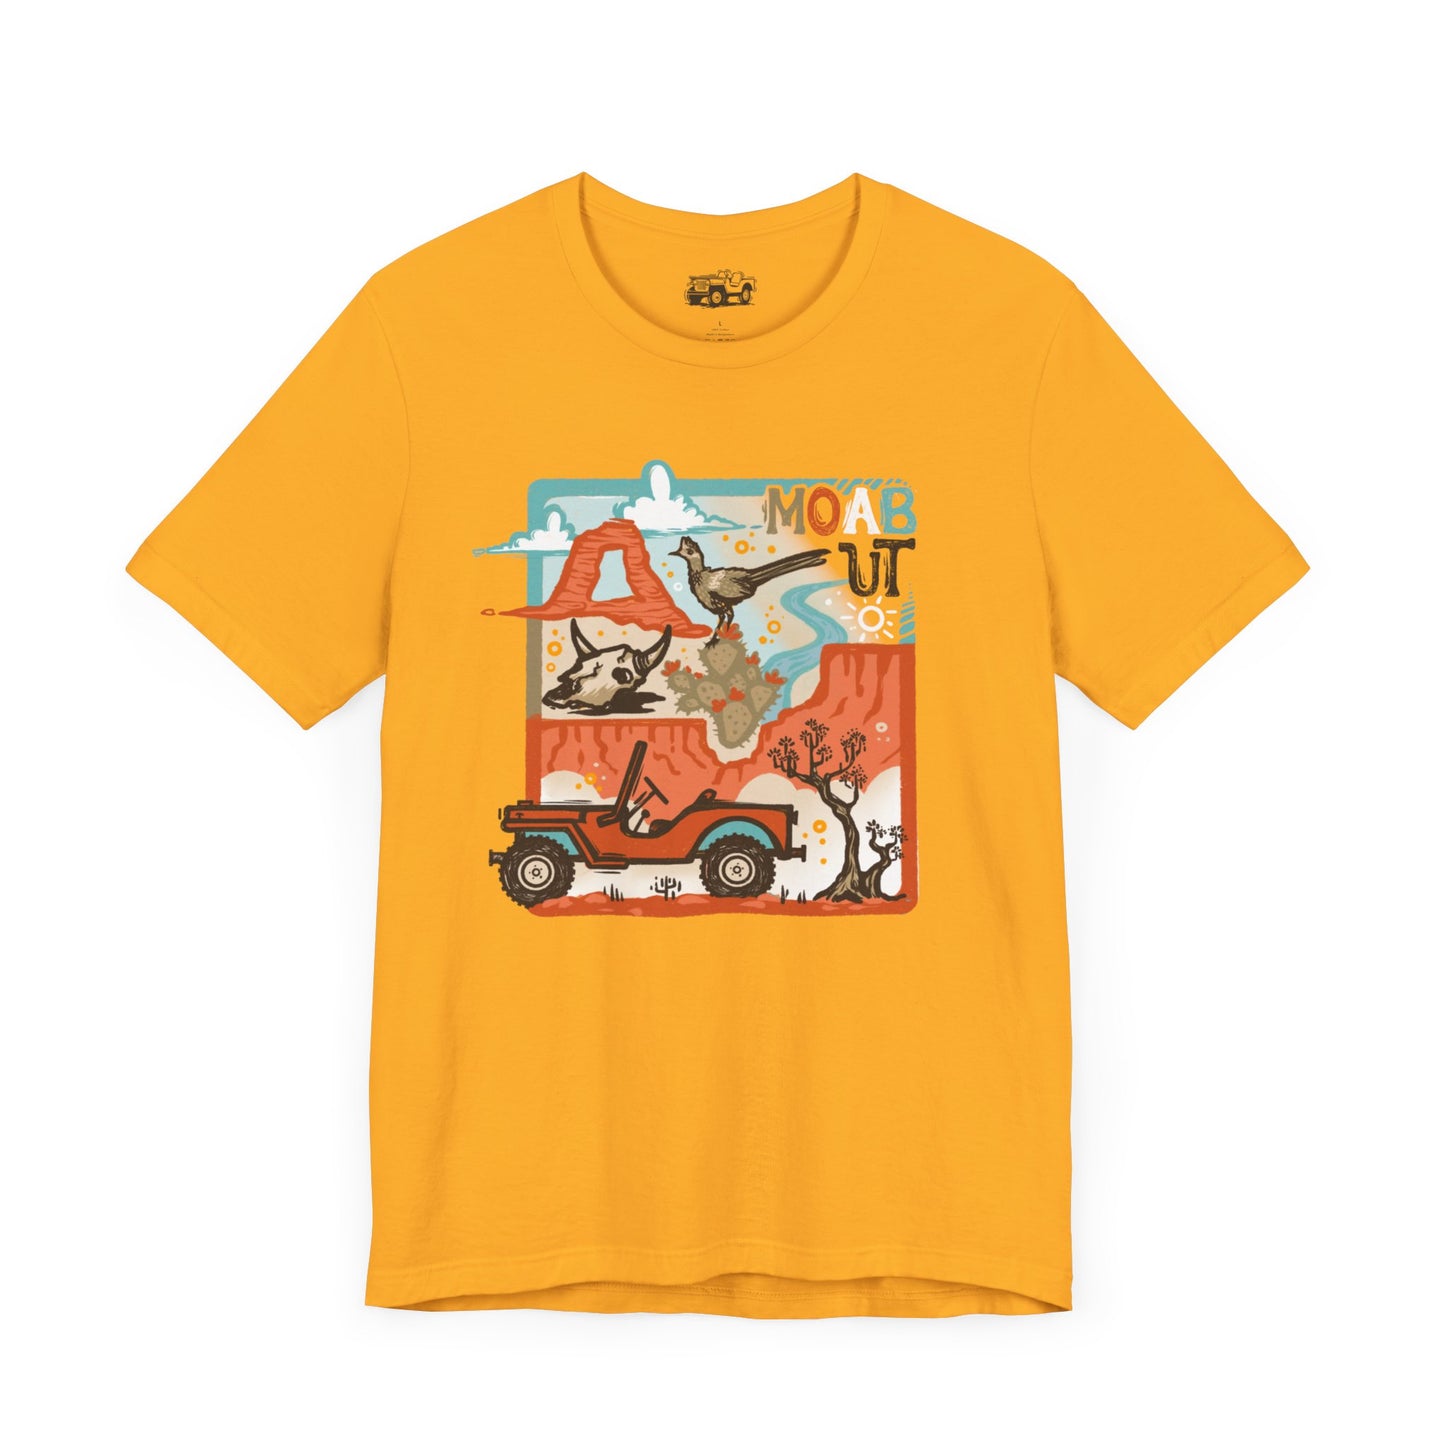 Moab Doodles T-Shirt